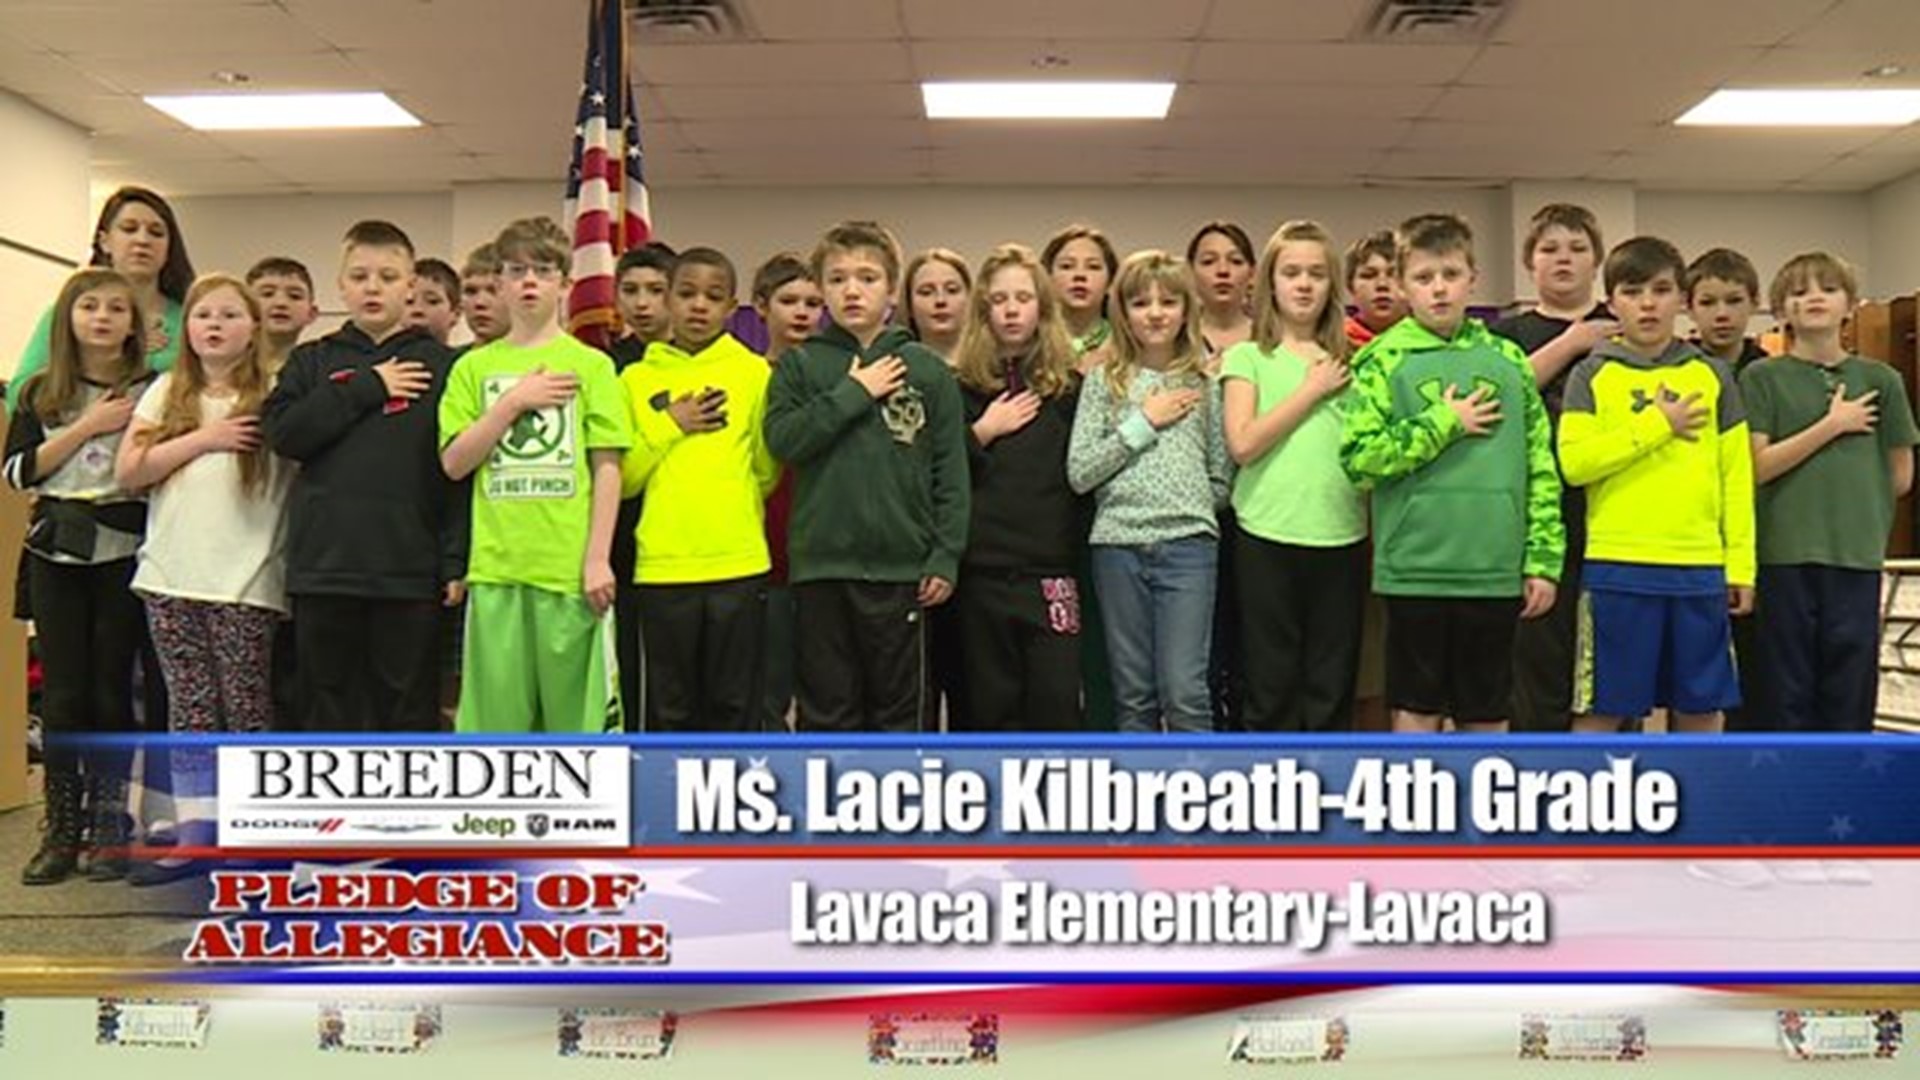 Lavaca Elementary, Ms. Kilbreath - Fourth Grade